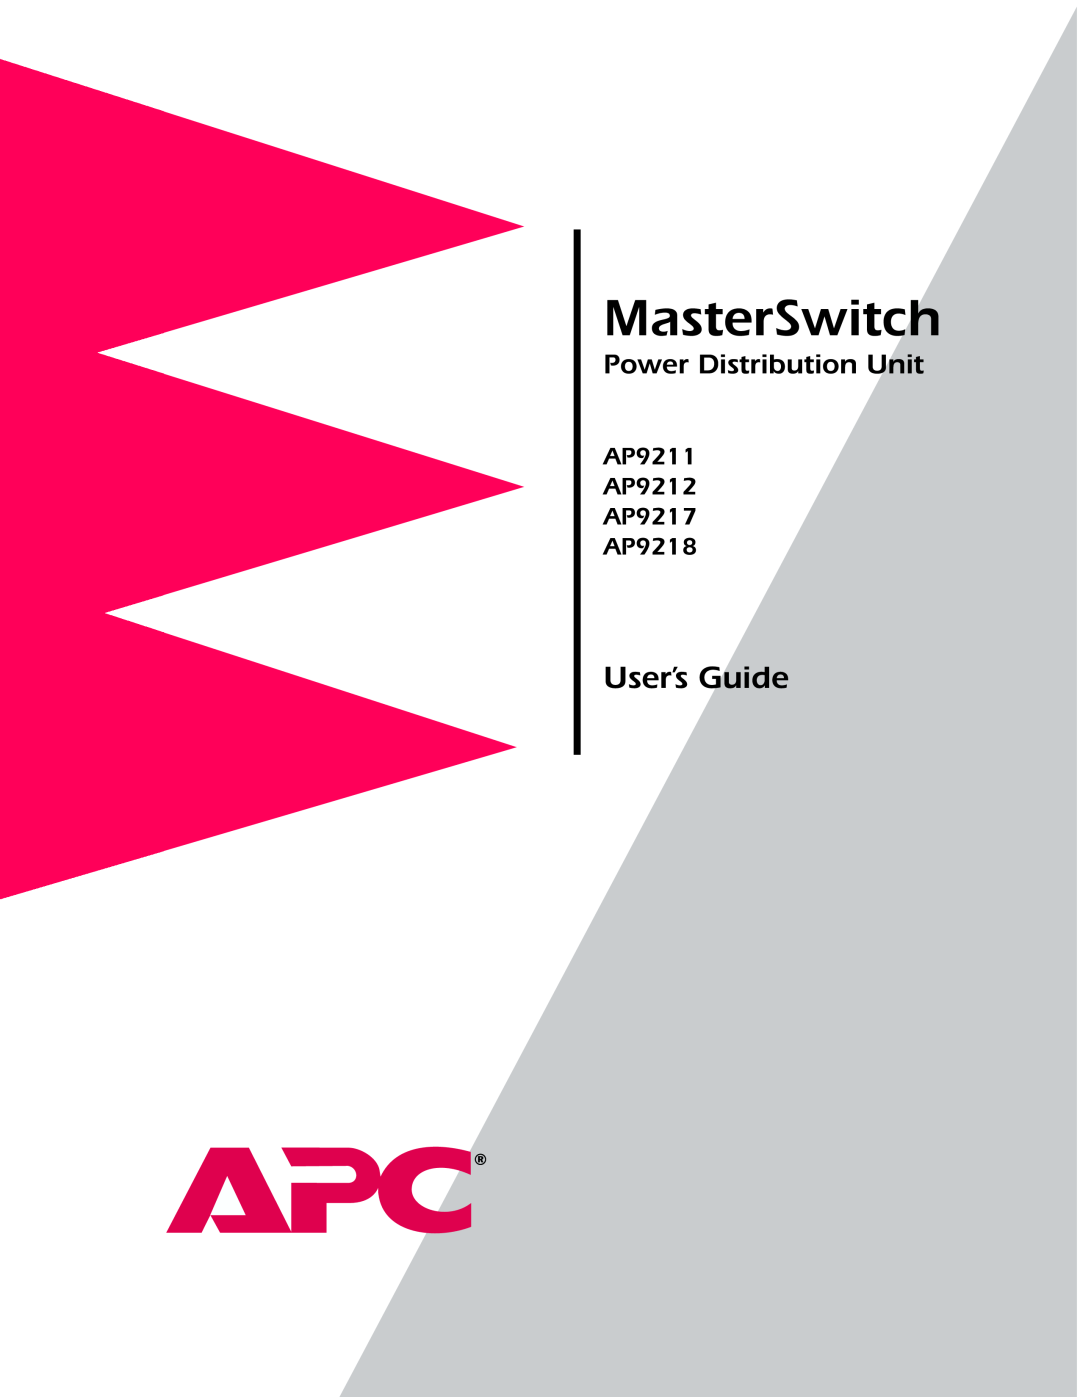 APC manual MasterSwitch, User’s Guide, Power Distribution Unit, AP9211 AP9212 AP9217 AP9218 